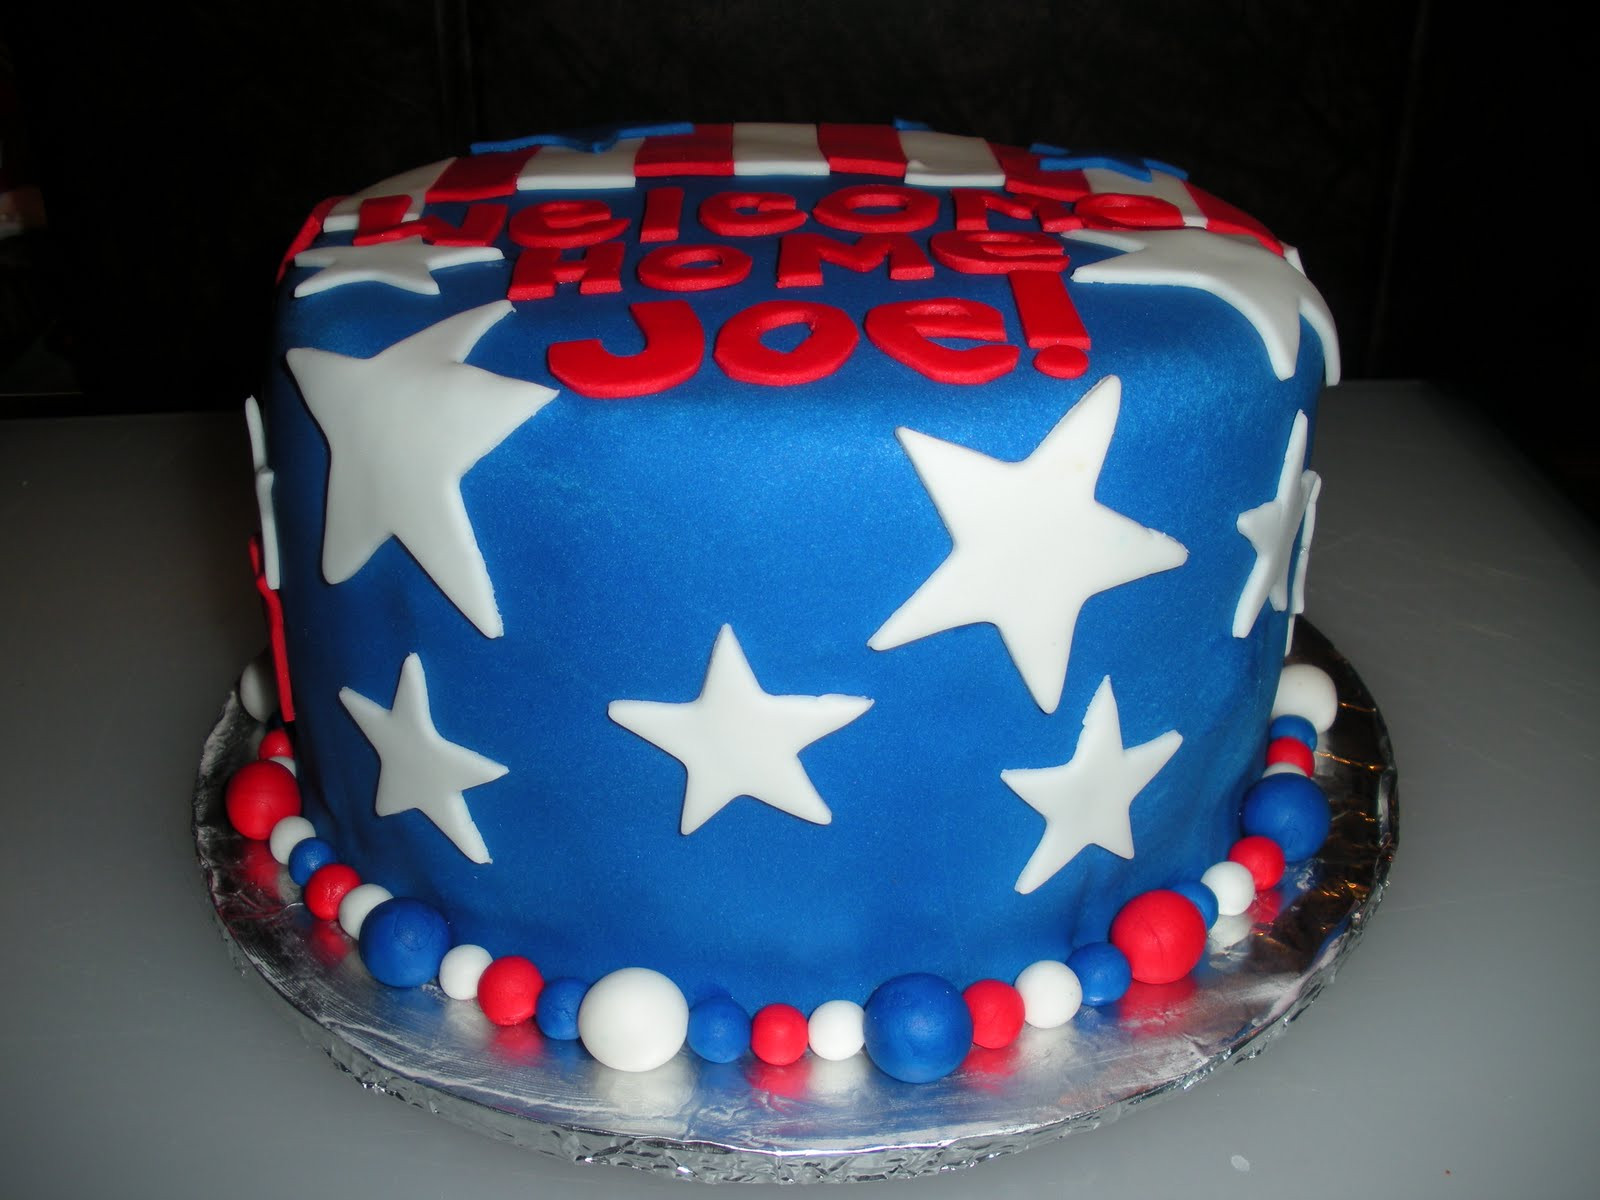 Best ideas about Happy Birthday Joe Cake
. Save or Pin Beachy Cakes Wel e home Joe & Happy Birthday Neece Now.